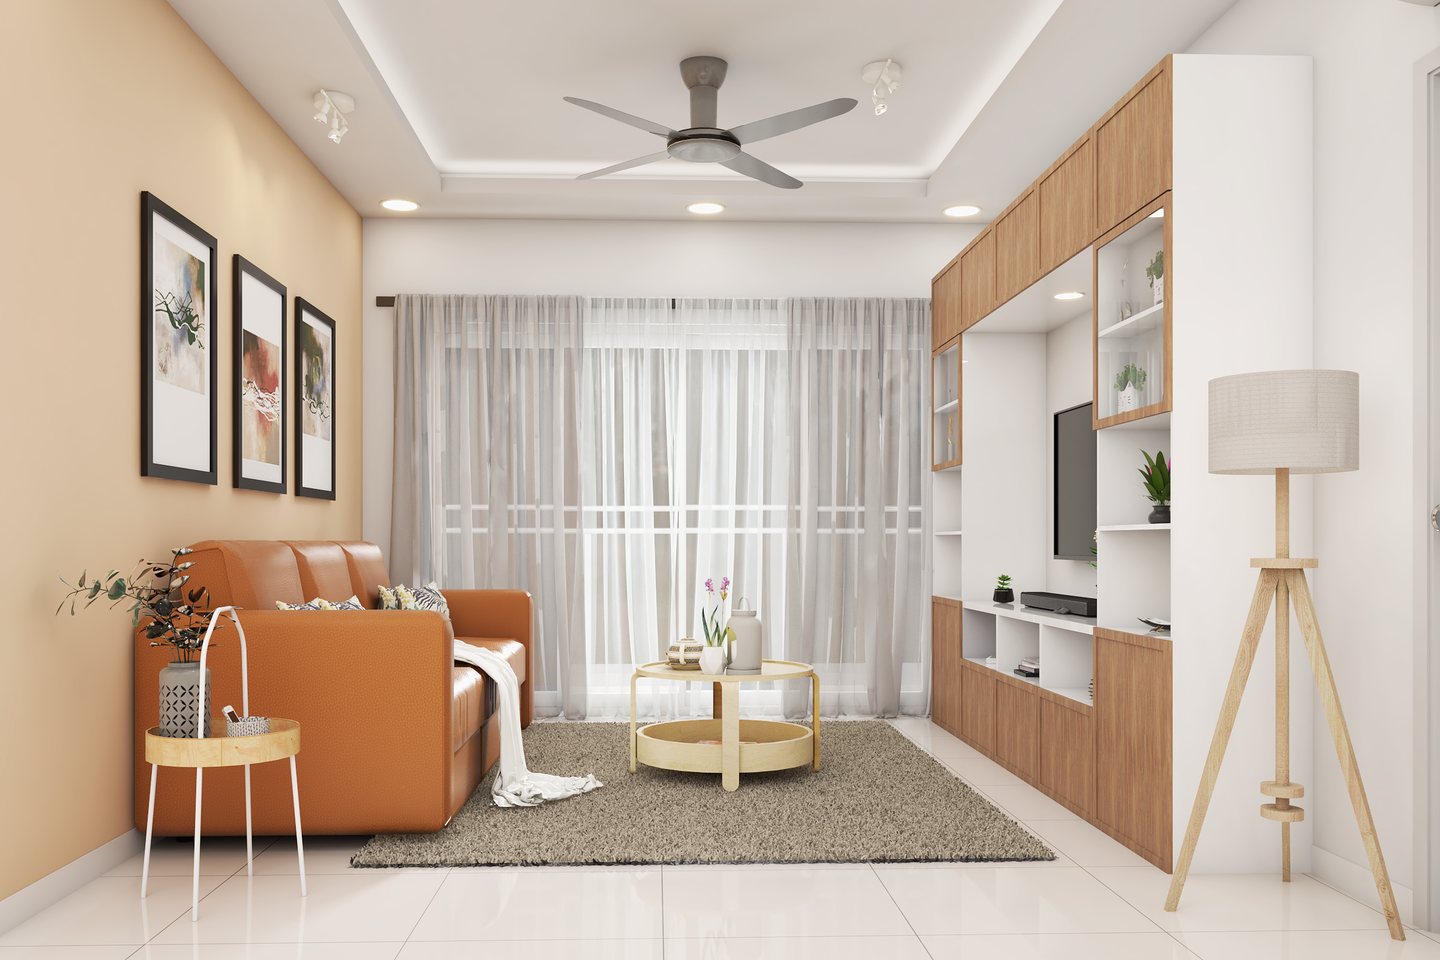 Contemporary Living Room With Entertainment Centre - Livspace